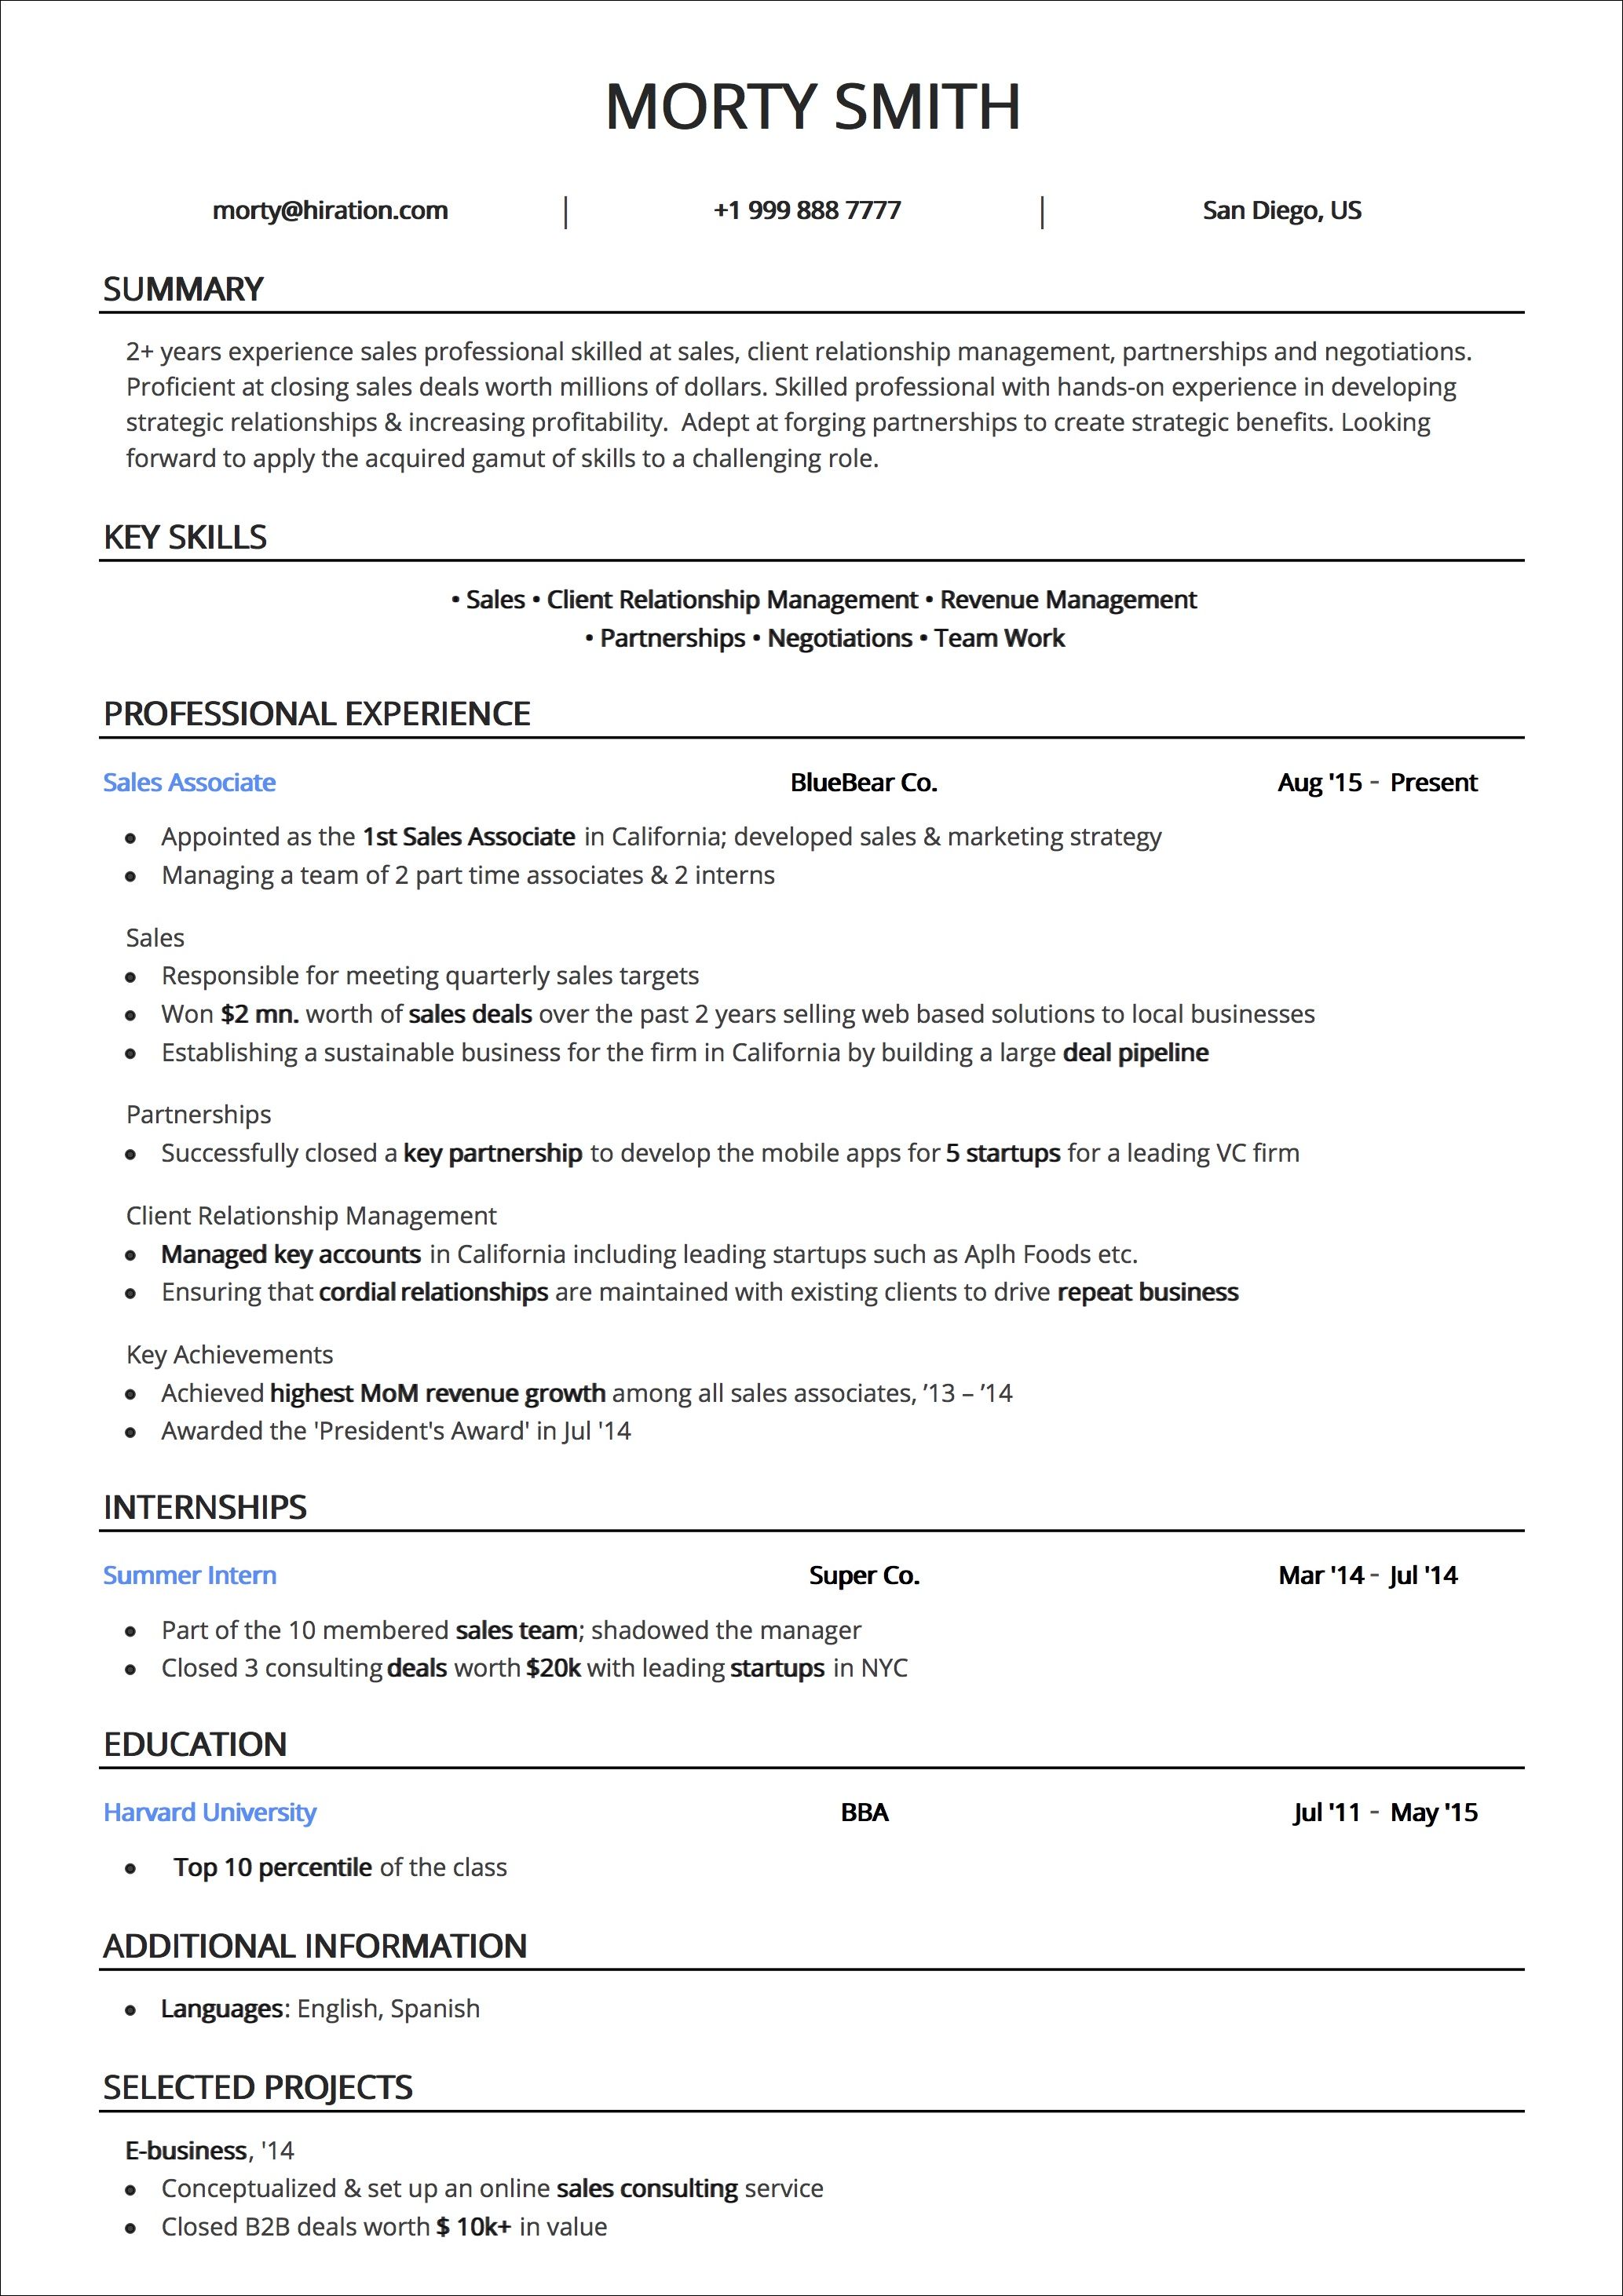 Resume Templates Free Simple Black resume templates free|wikiresume.com